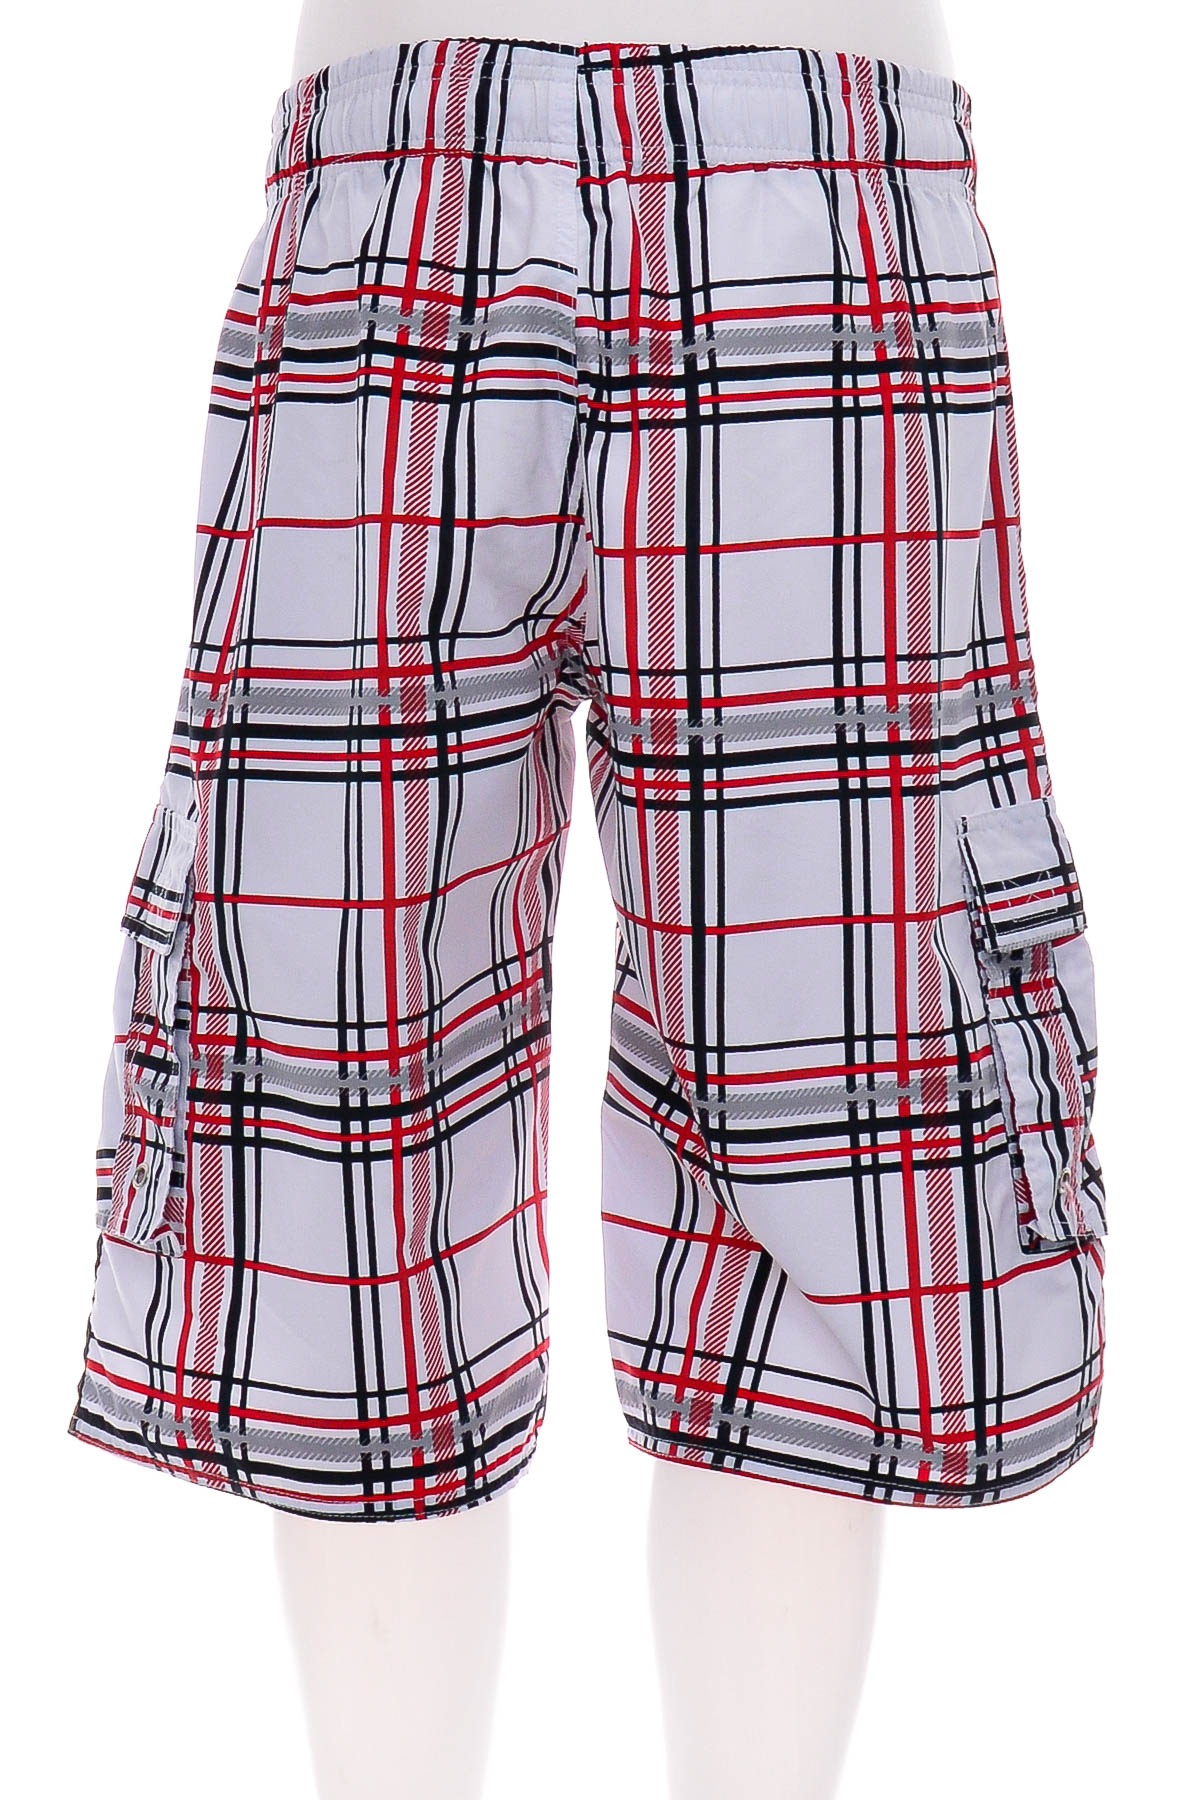 Men's shorts - Saps - 1